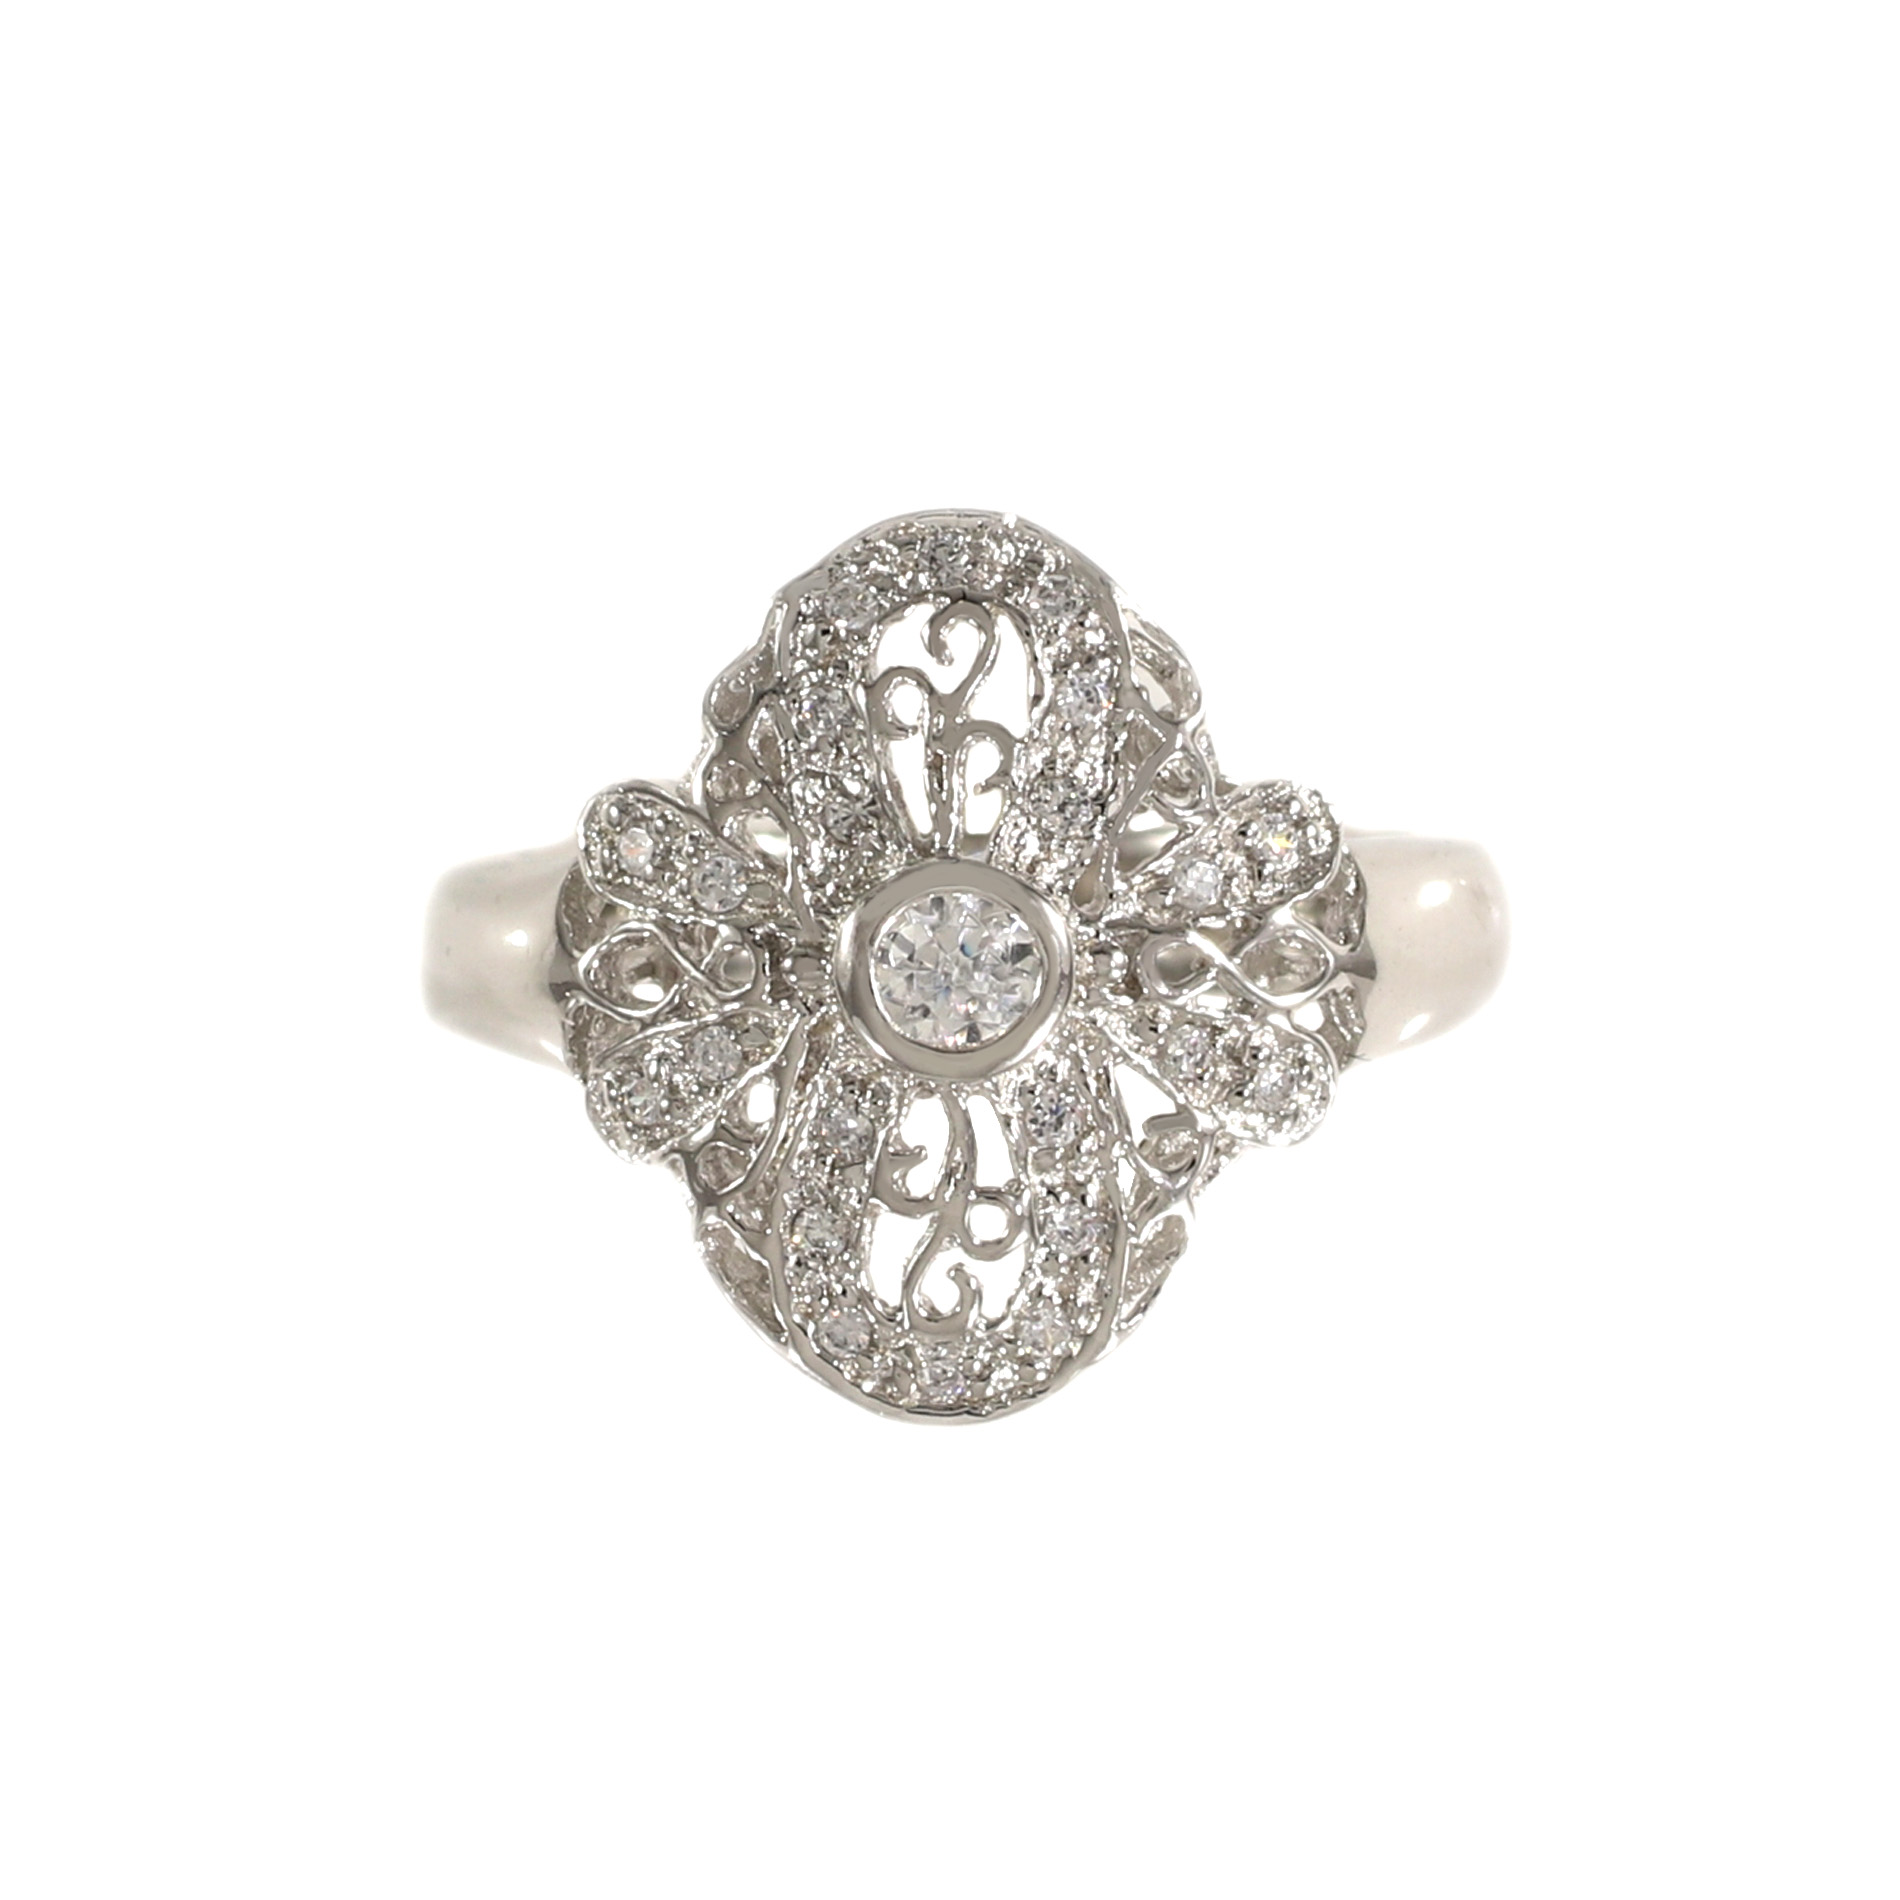 Tamara G Designs | Vintage Floral Inspired Ring